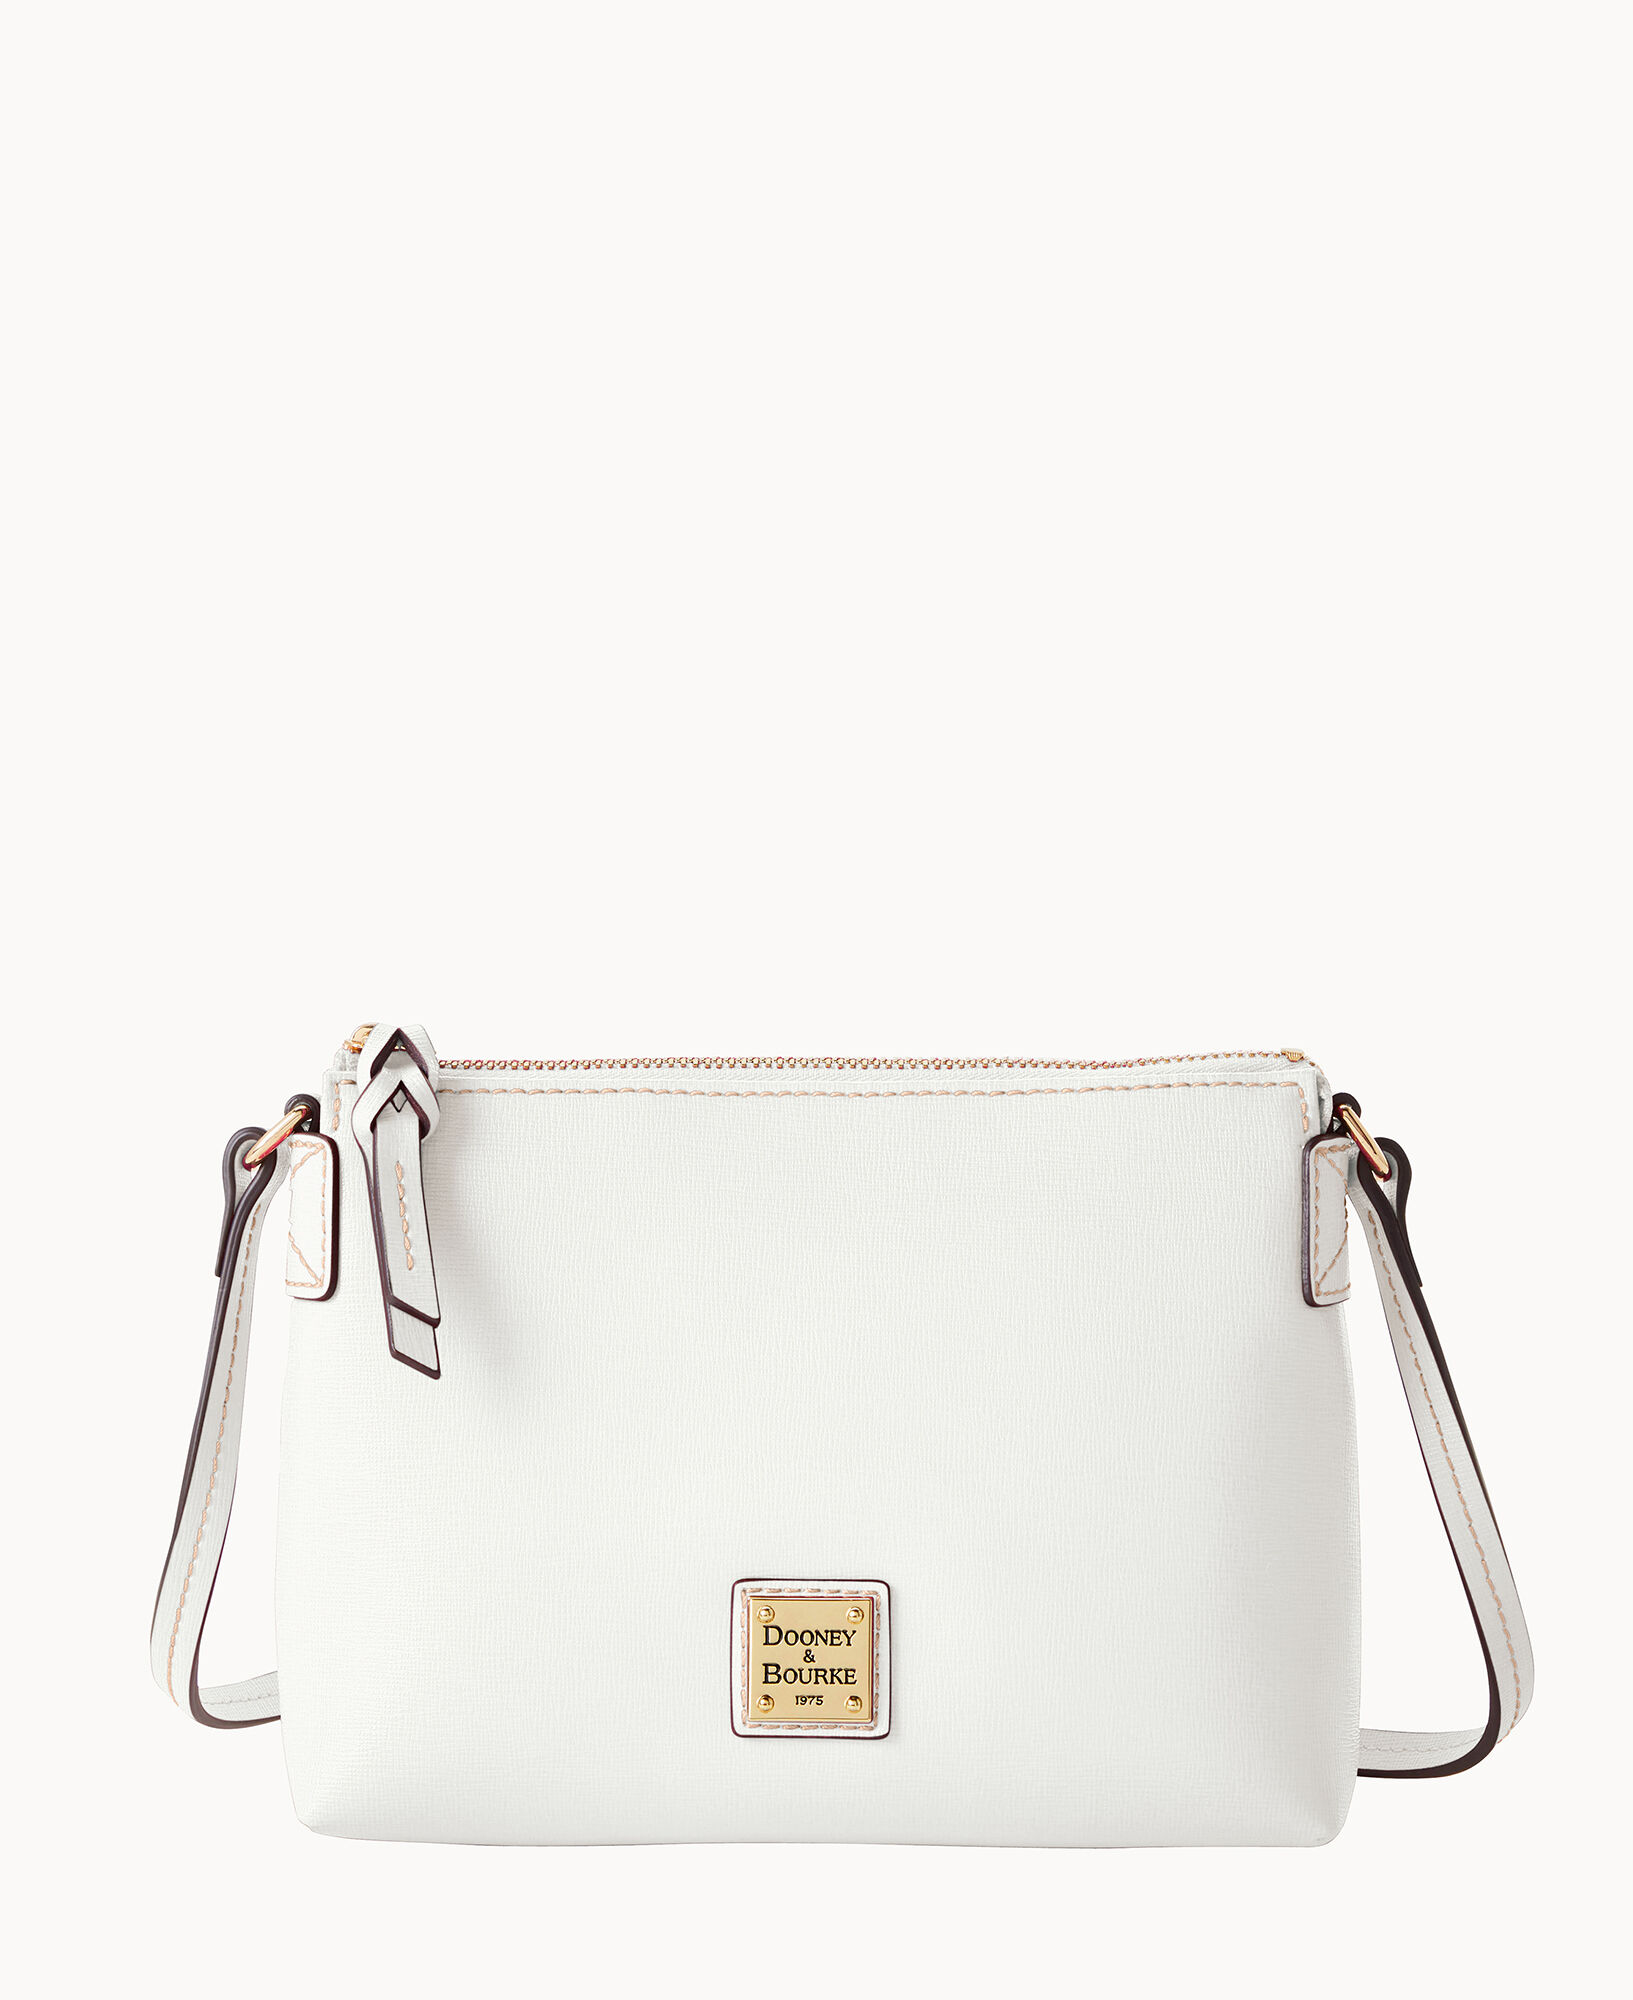 Dooney & Bourke Handbag, Saffiano Lexi Crossbody - Brown Tmoro: Handbags